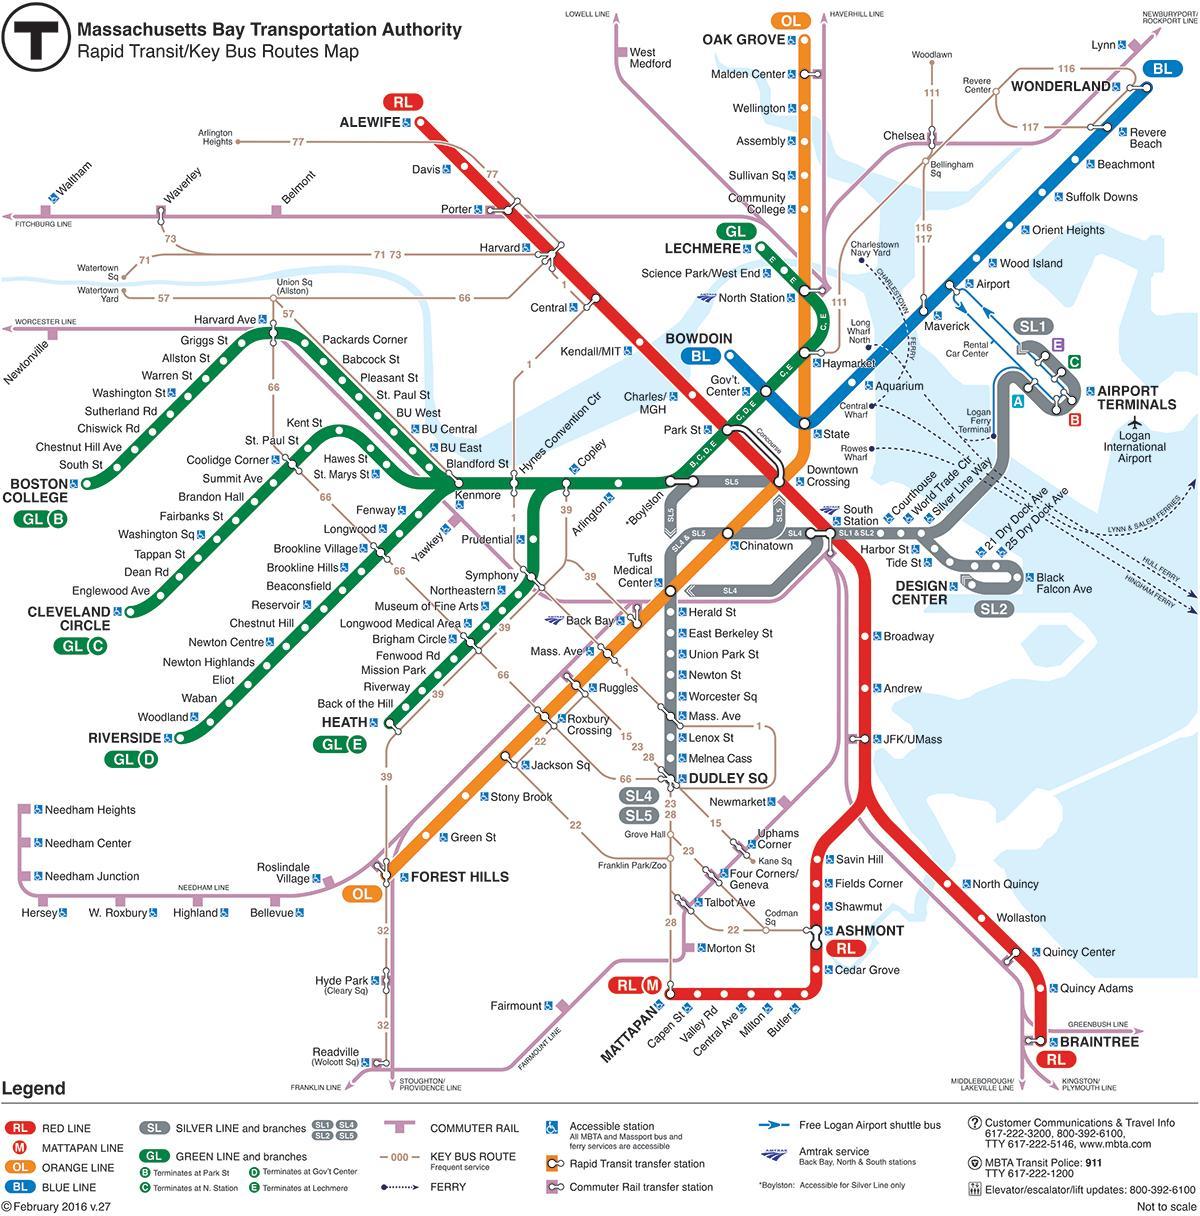 MBTA מפת הקו האדום